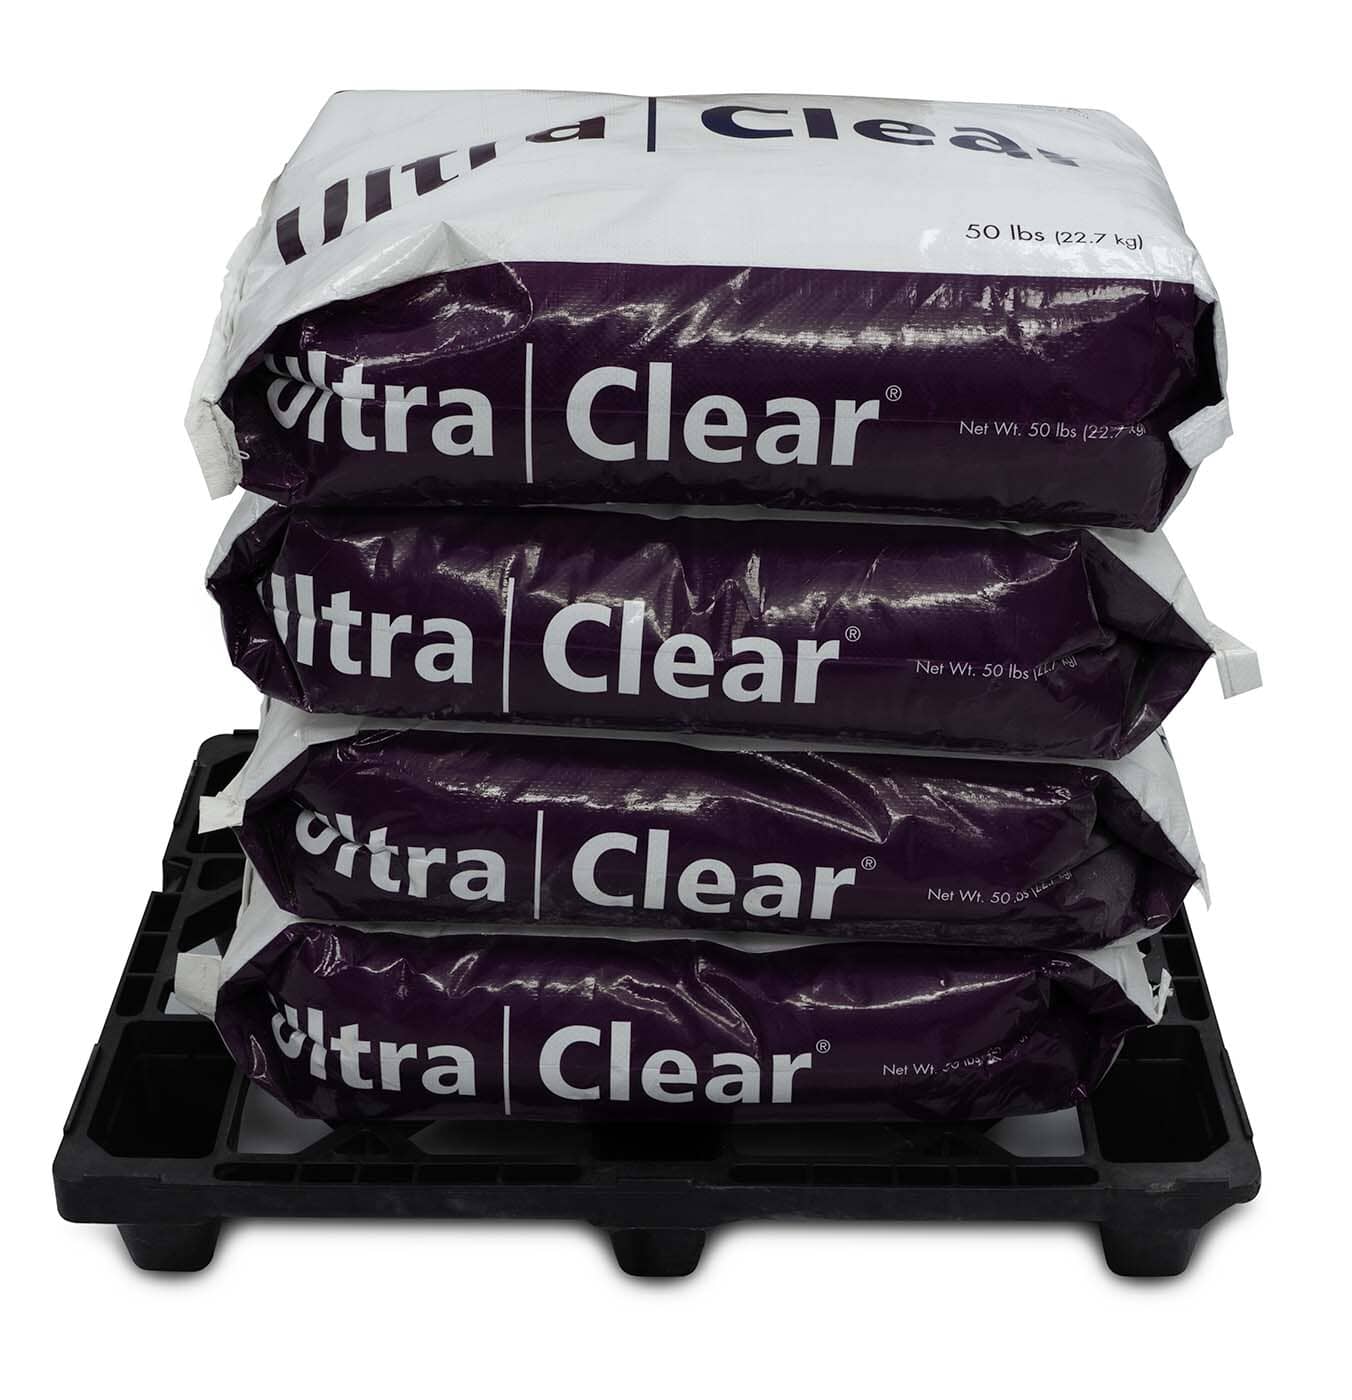 Ultra Clear L - Granular High Performance Bentonite for Bleaching & Decolorizing Edible Oils Shop All Categories BVV 4 x 50# BAGS 